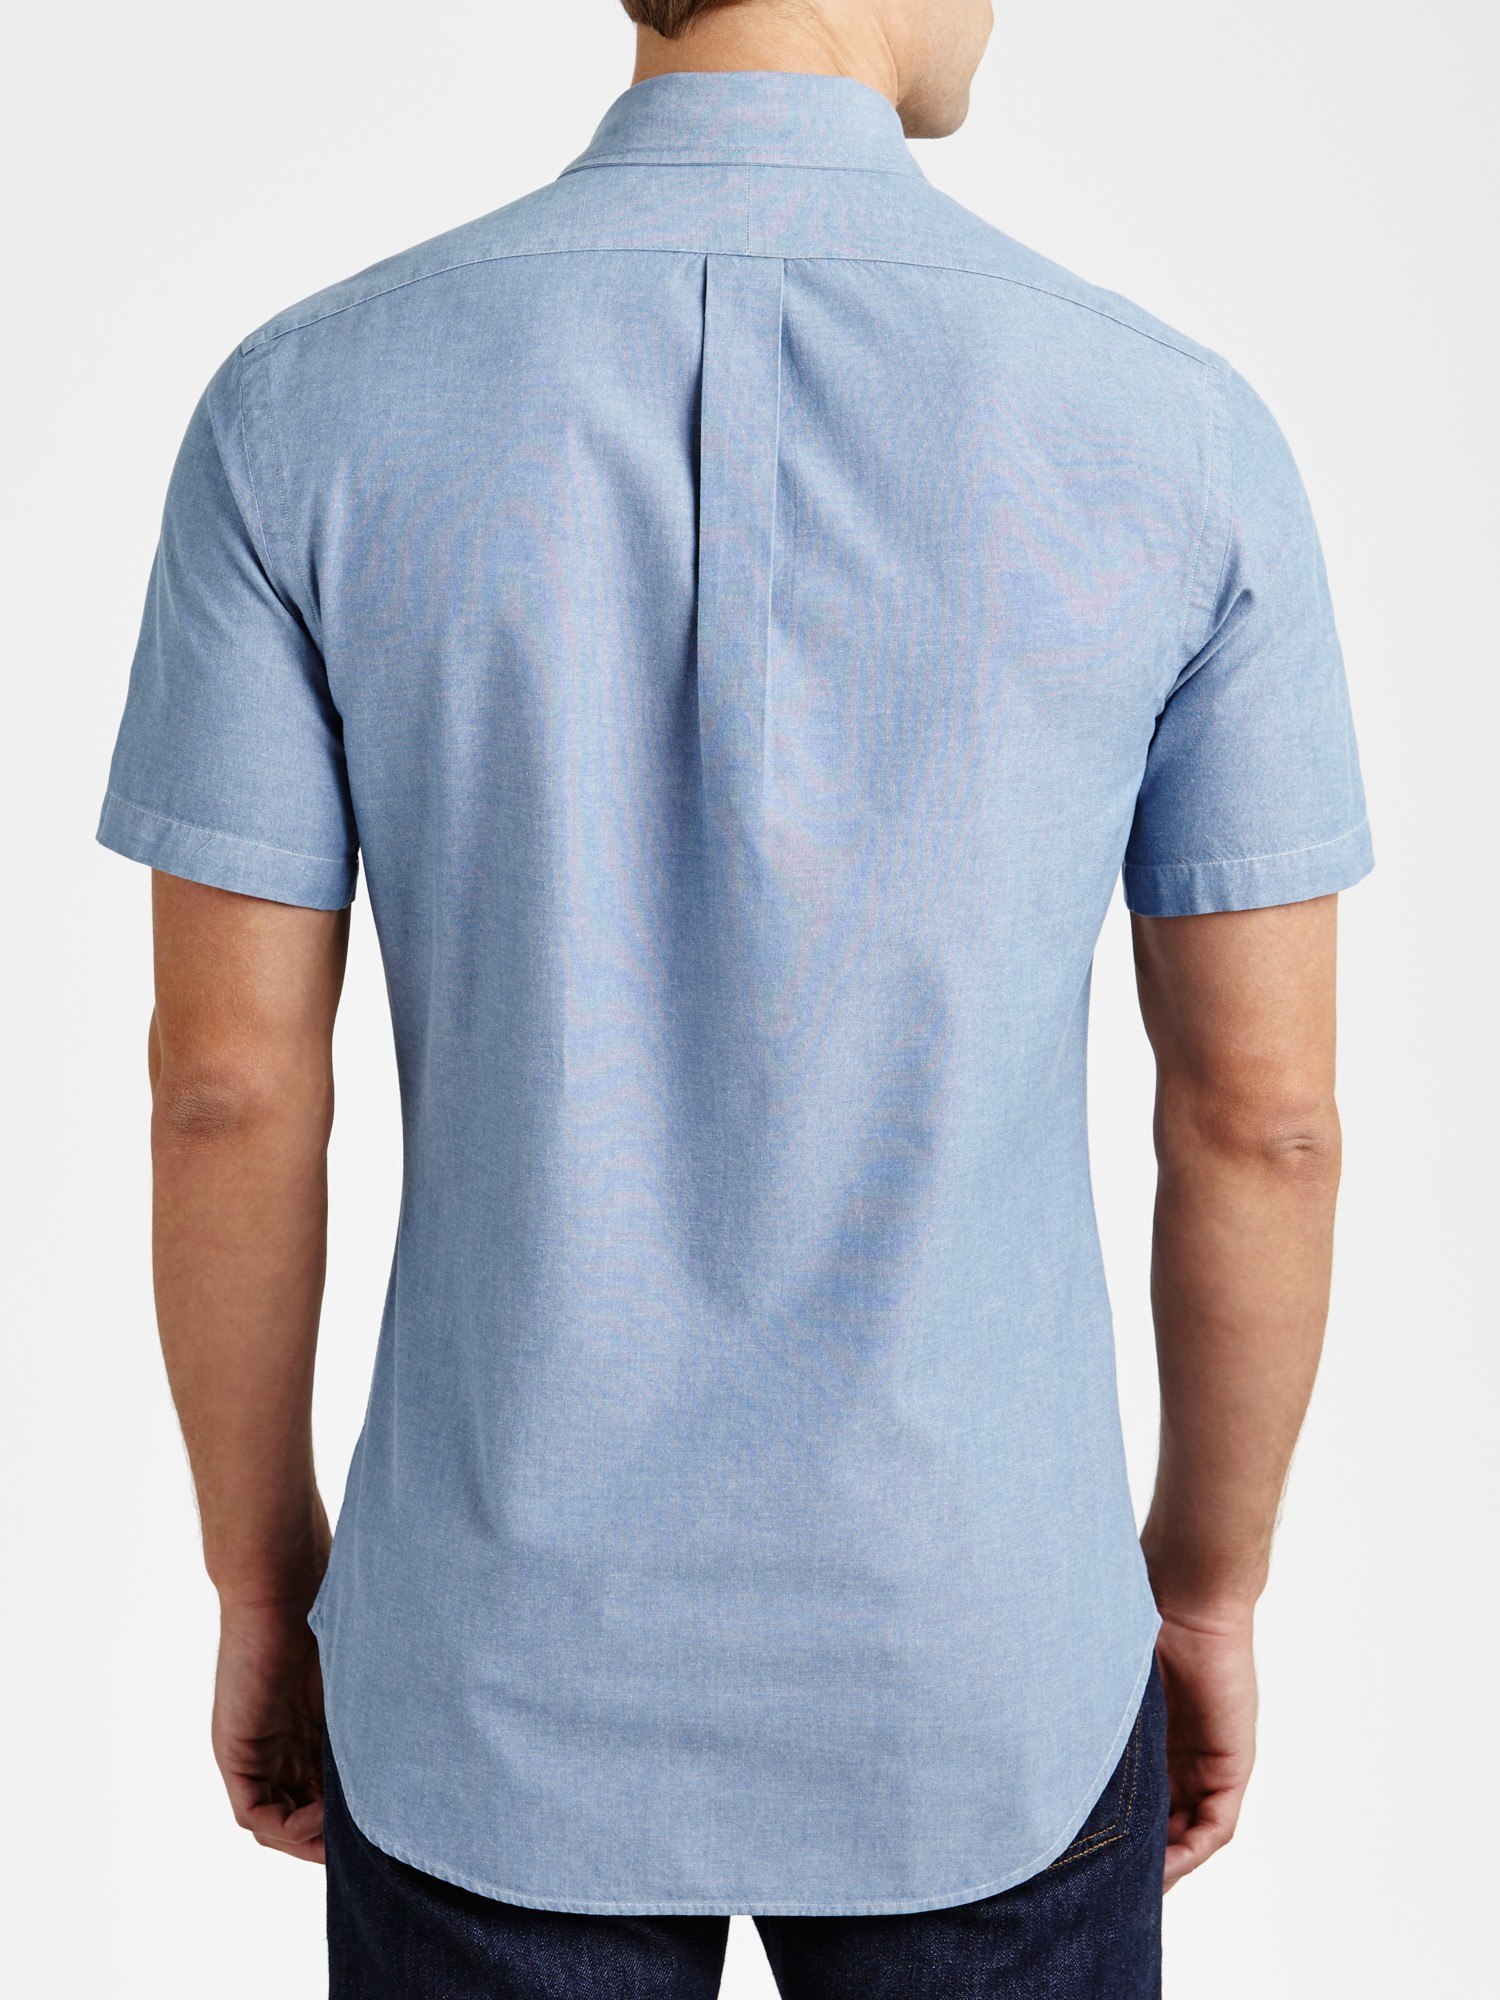 Polo Ralph Lauren Chambray Short Sleeve Shirt in Blue for Men - Lyst